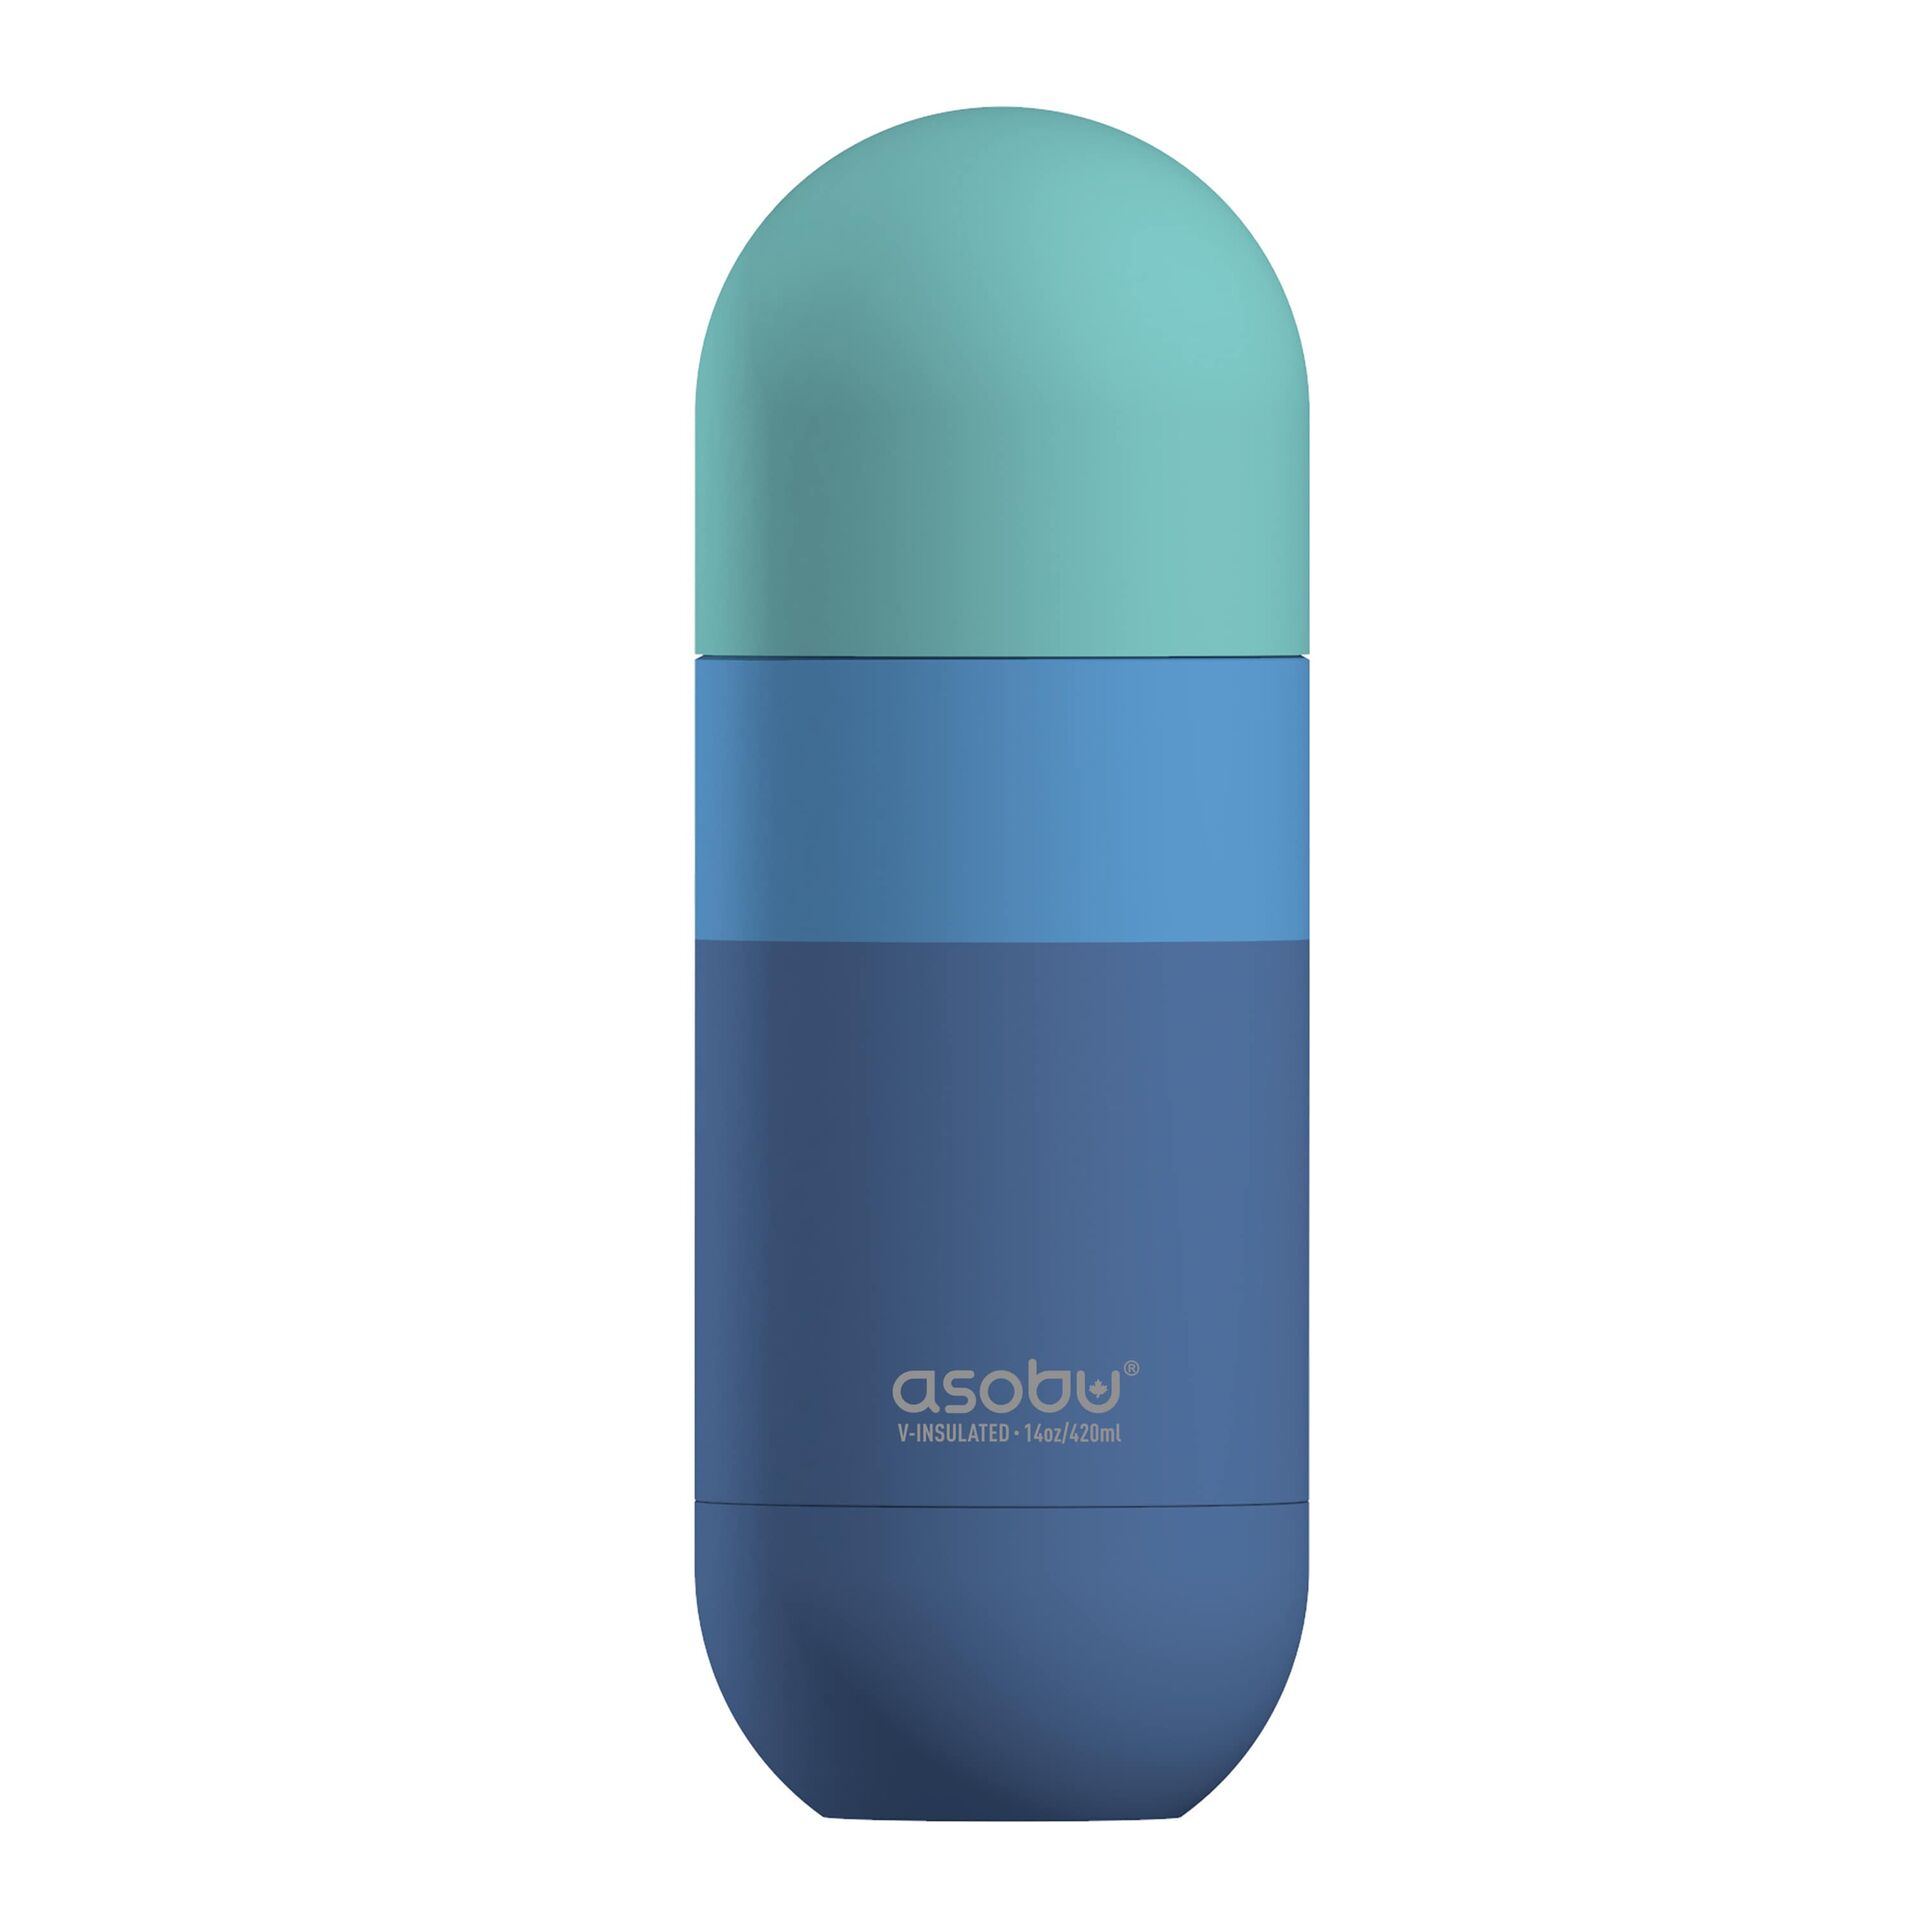 Custom Branded Asobu Orb - Pastel Blue